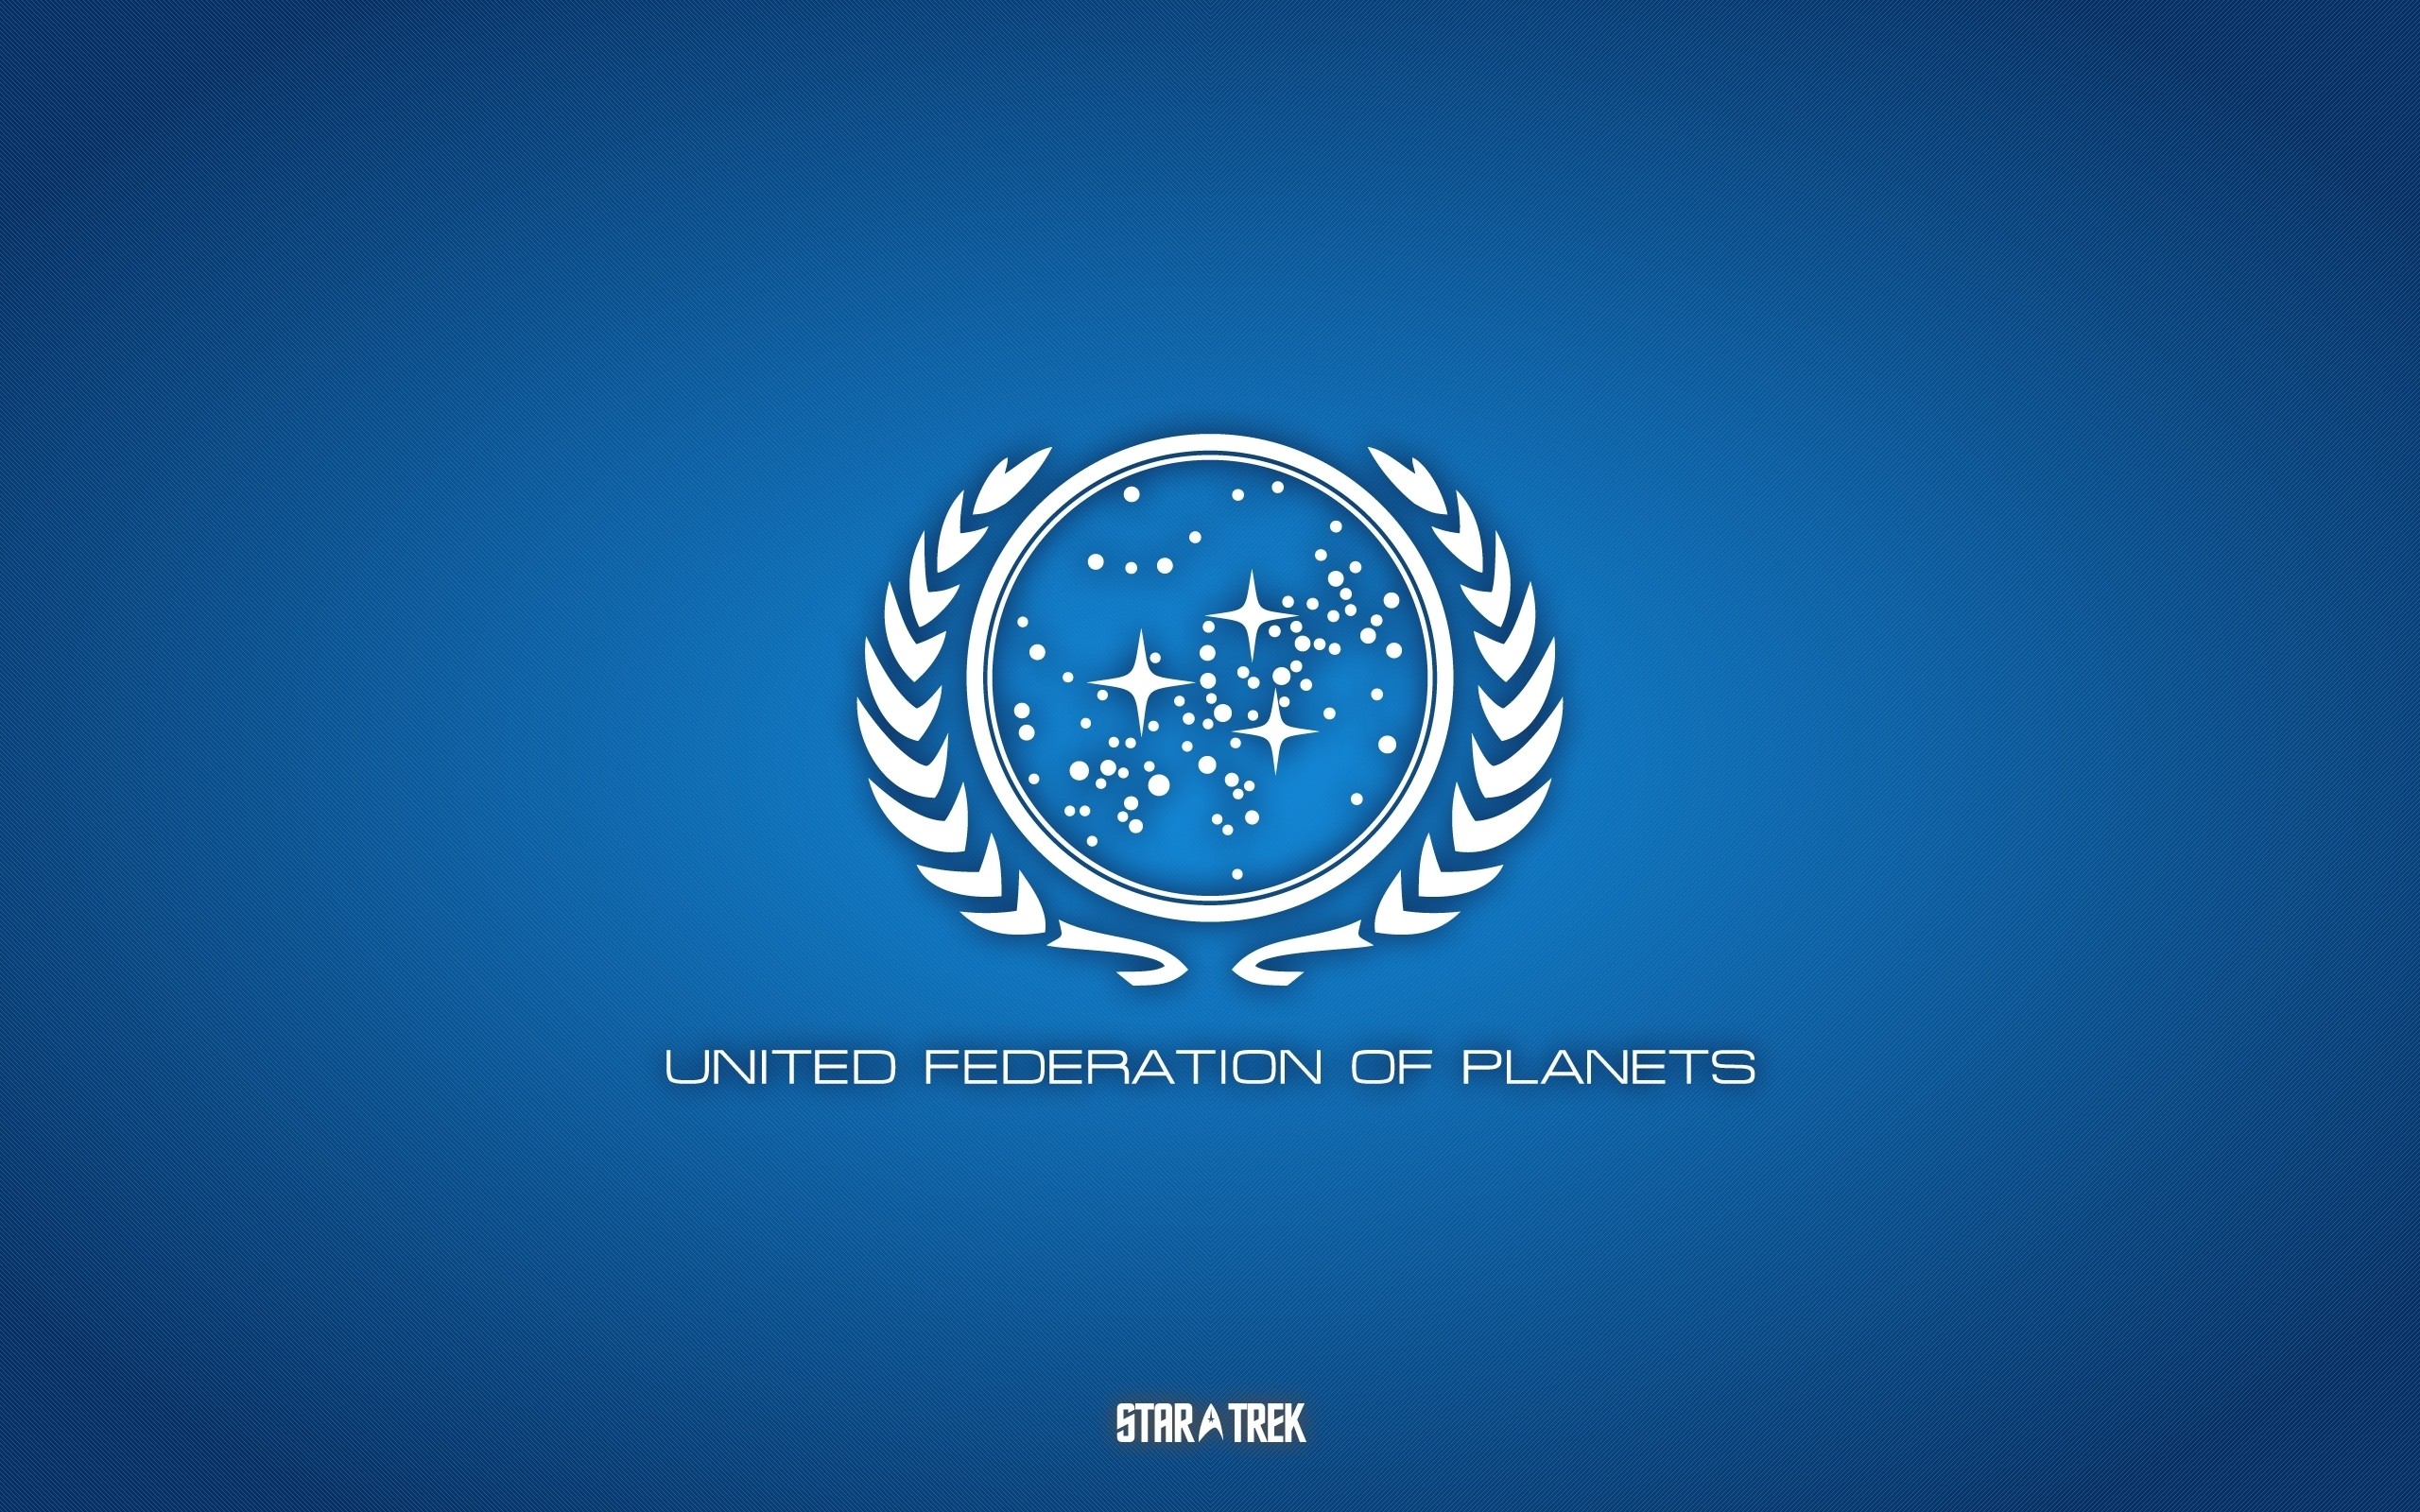 General 2560x1600 Star Trek simple background logo blue background